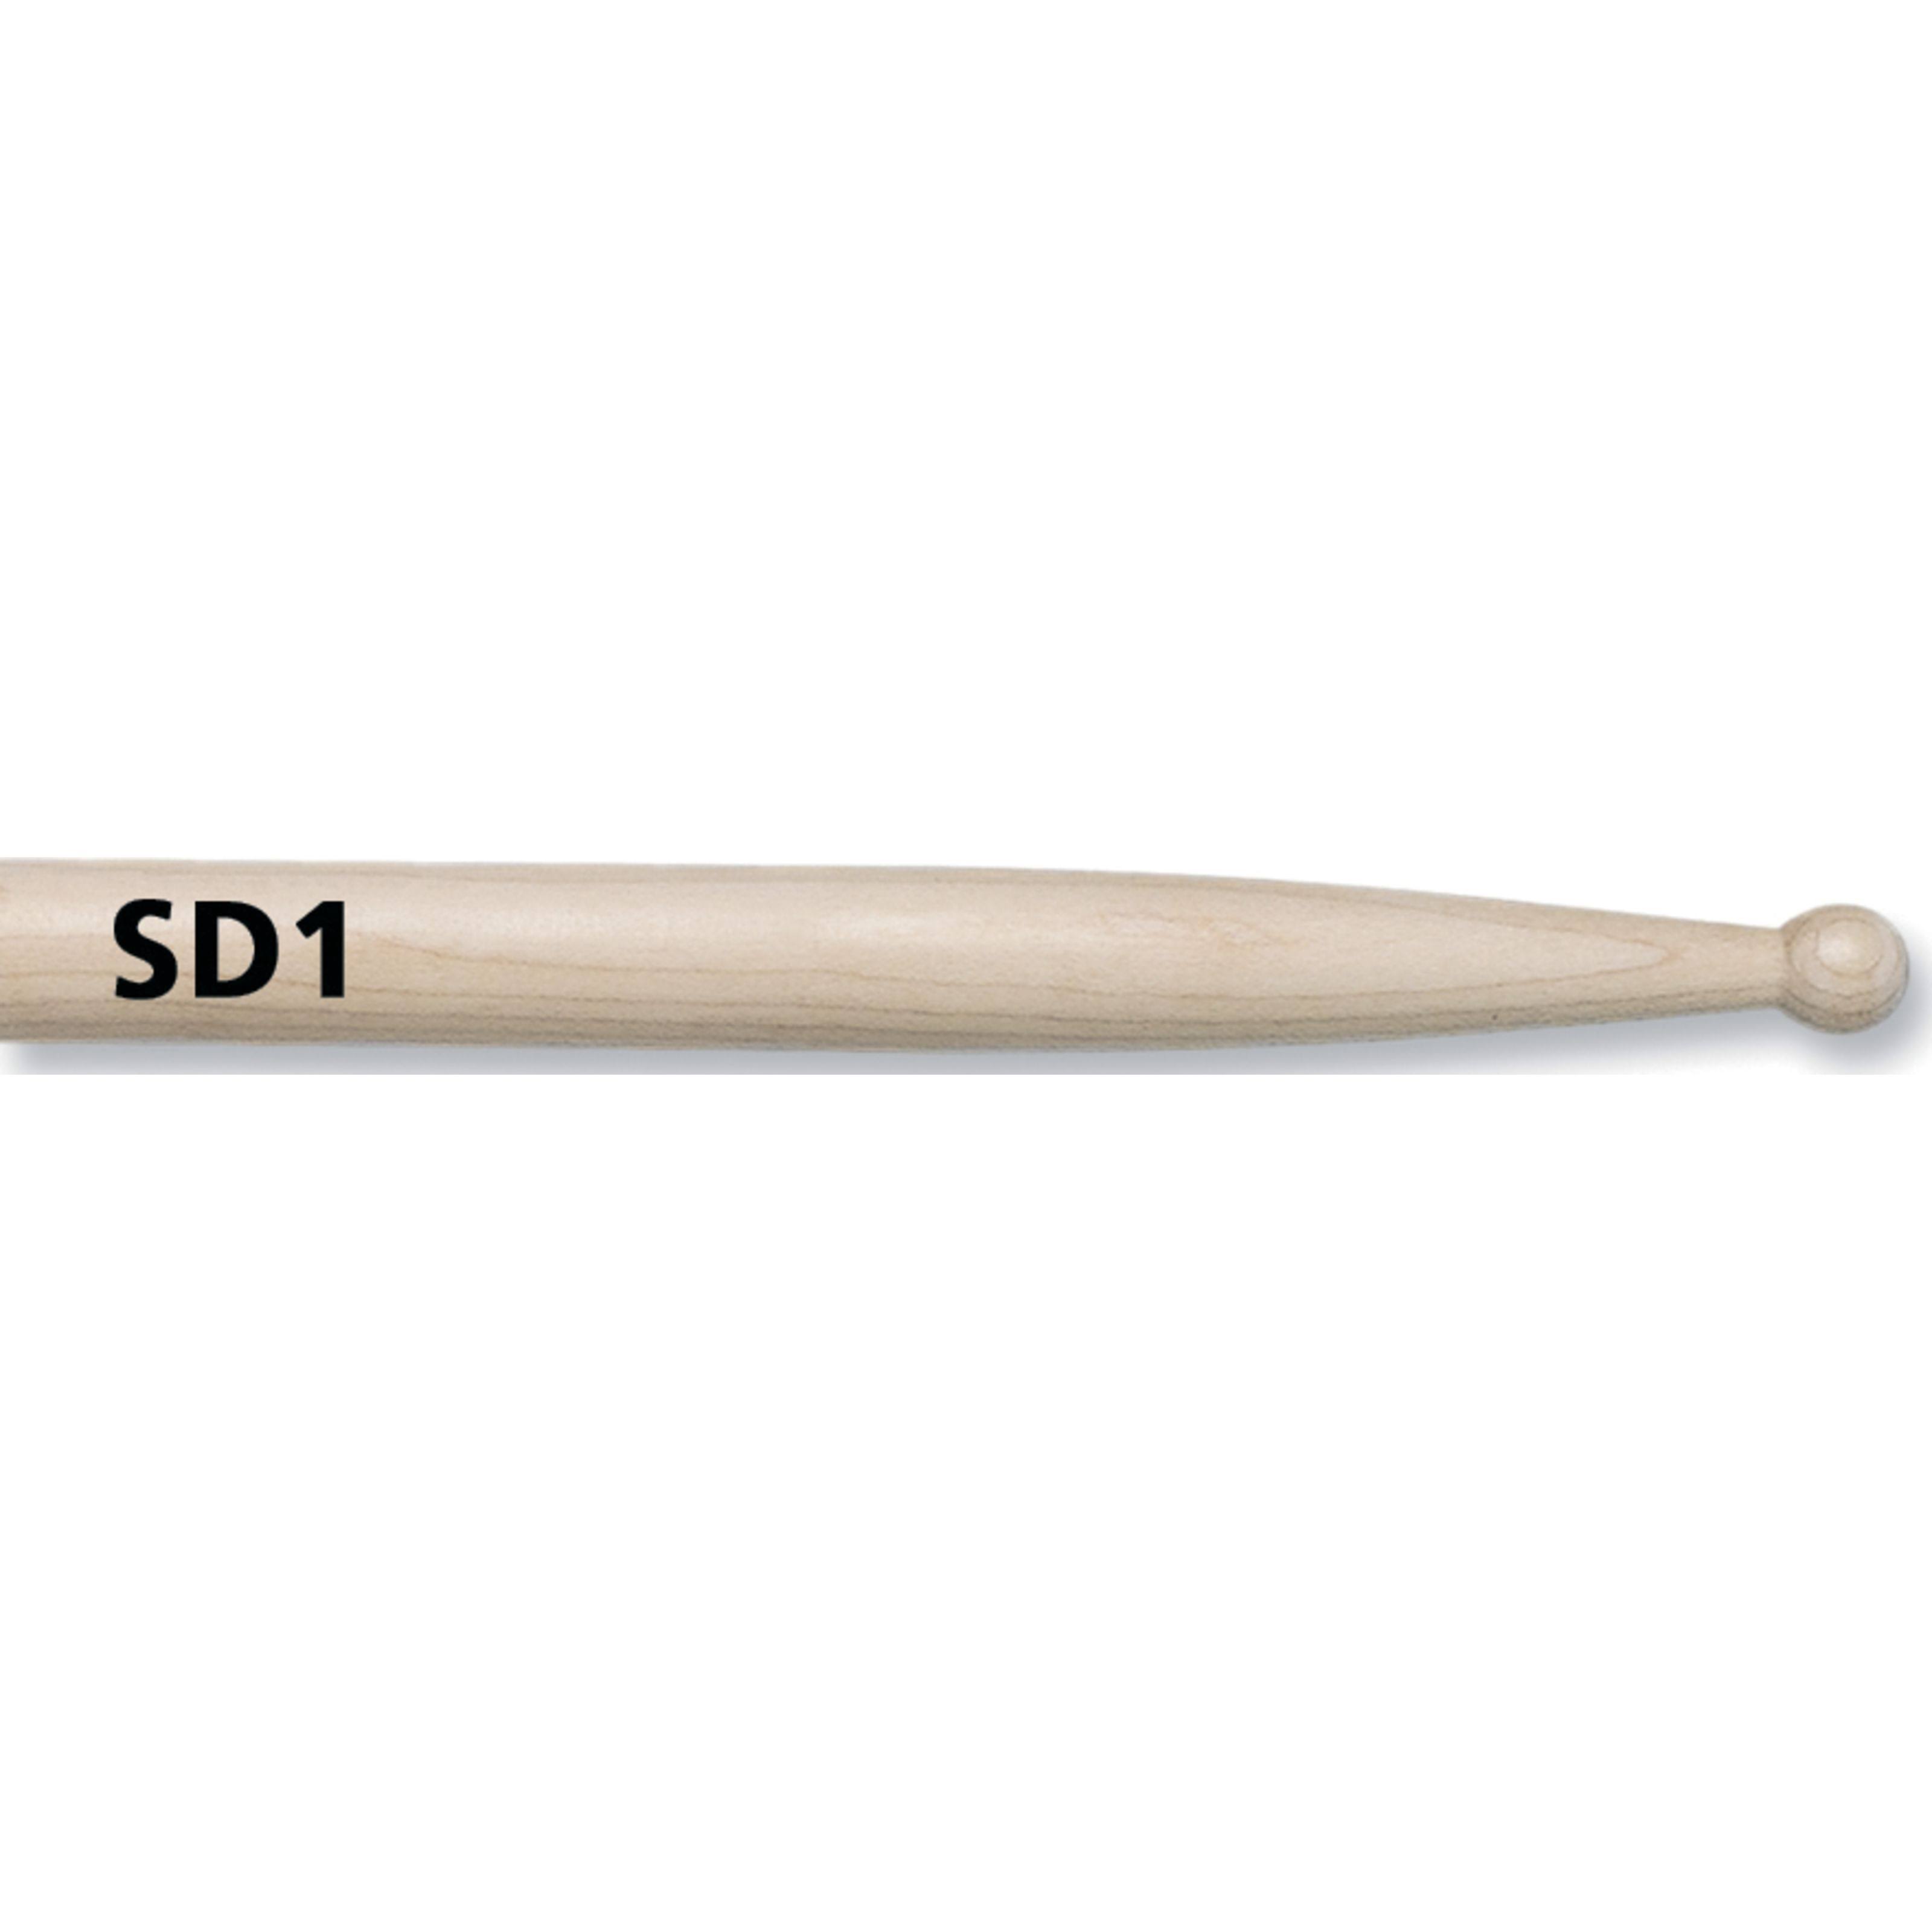 Vic Firth SD1 American Custom General Wood Tip Drumsticks